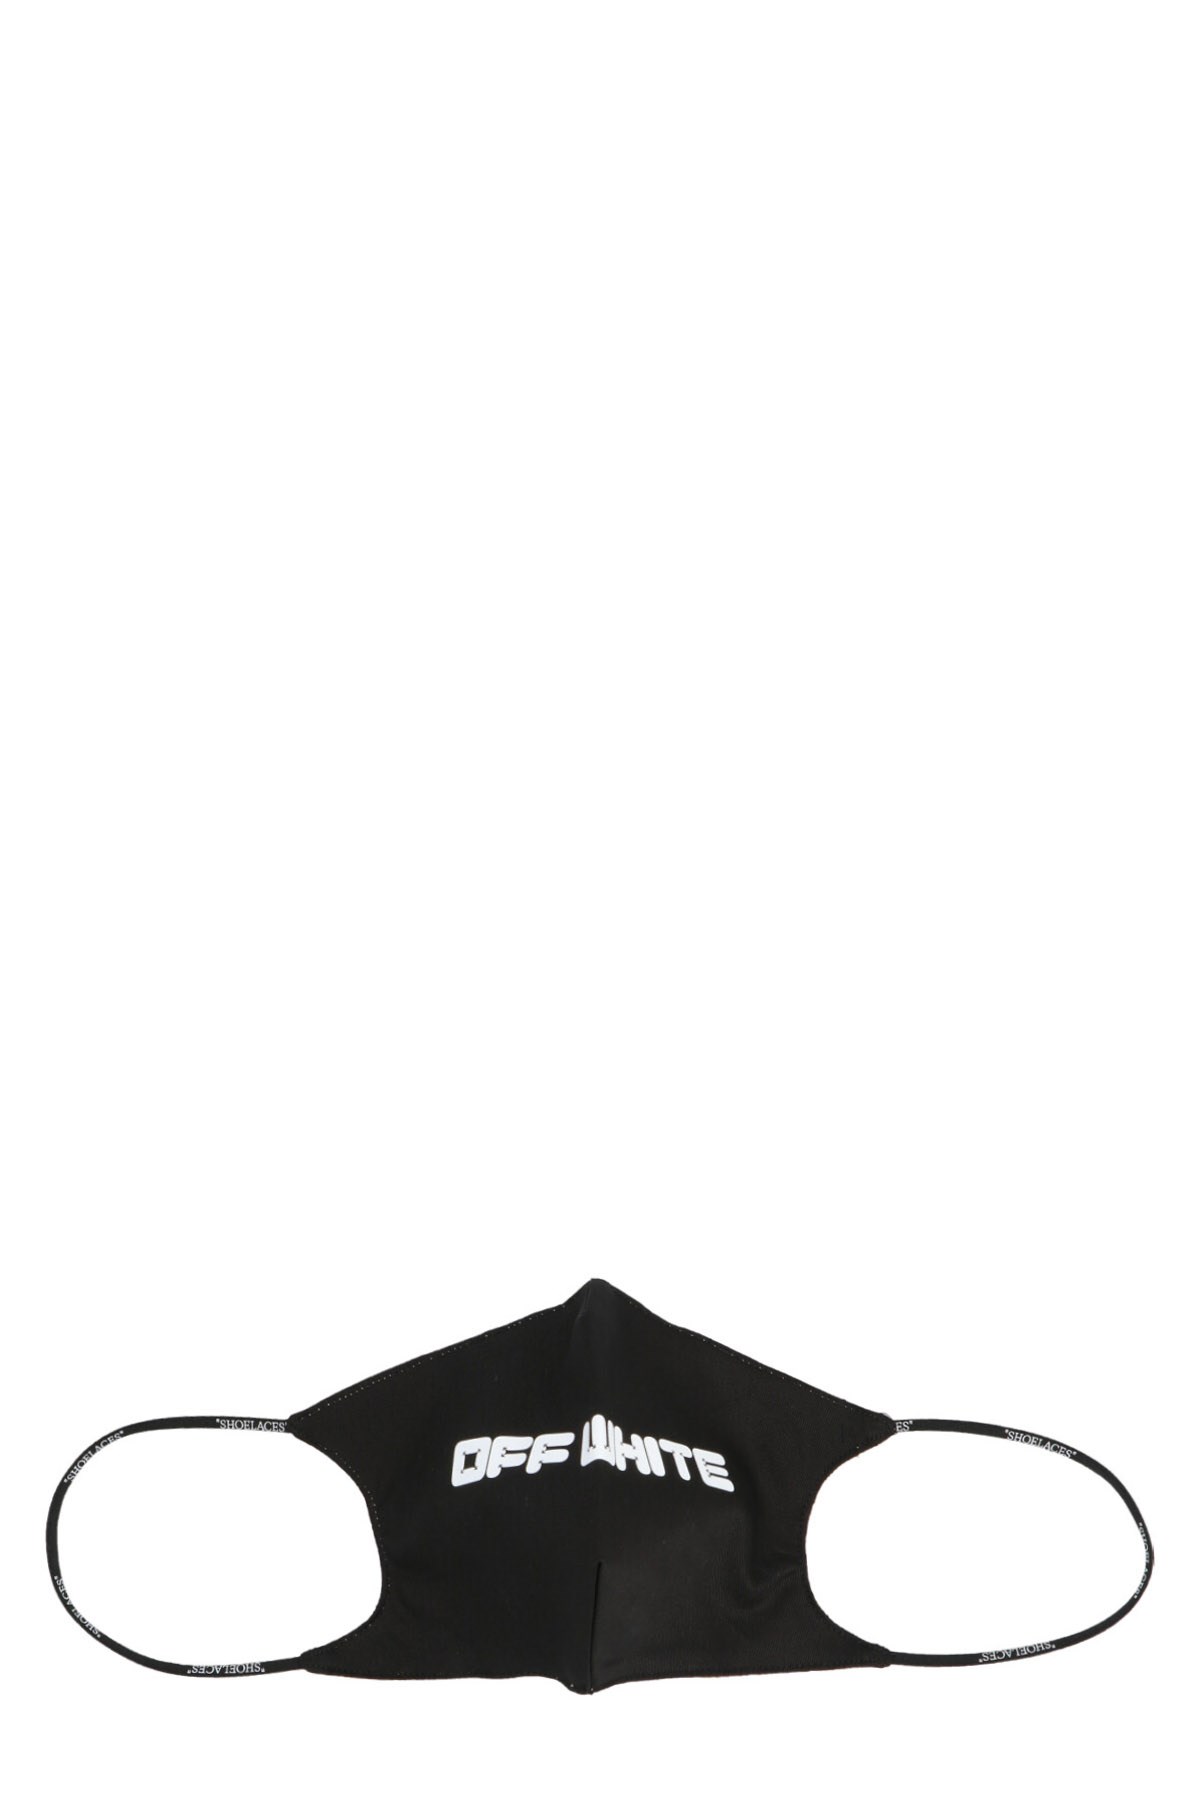 OFF-WHITE 'Arrow Font' Mask